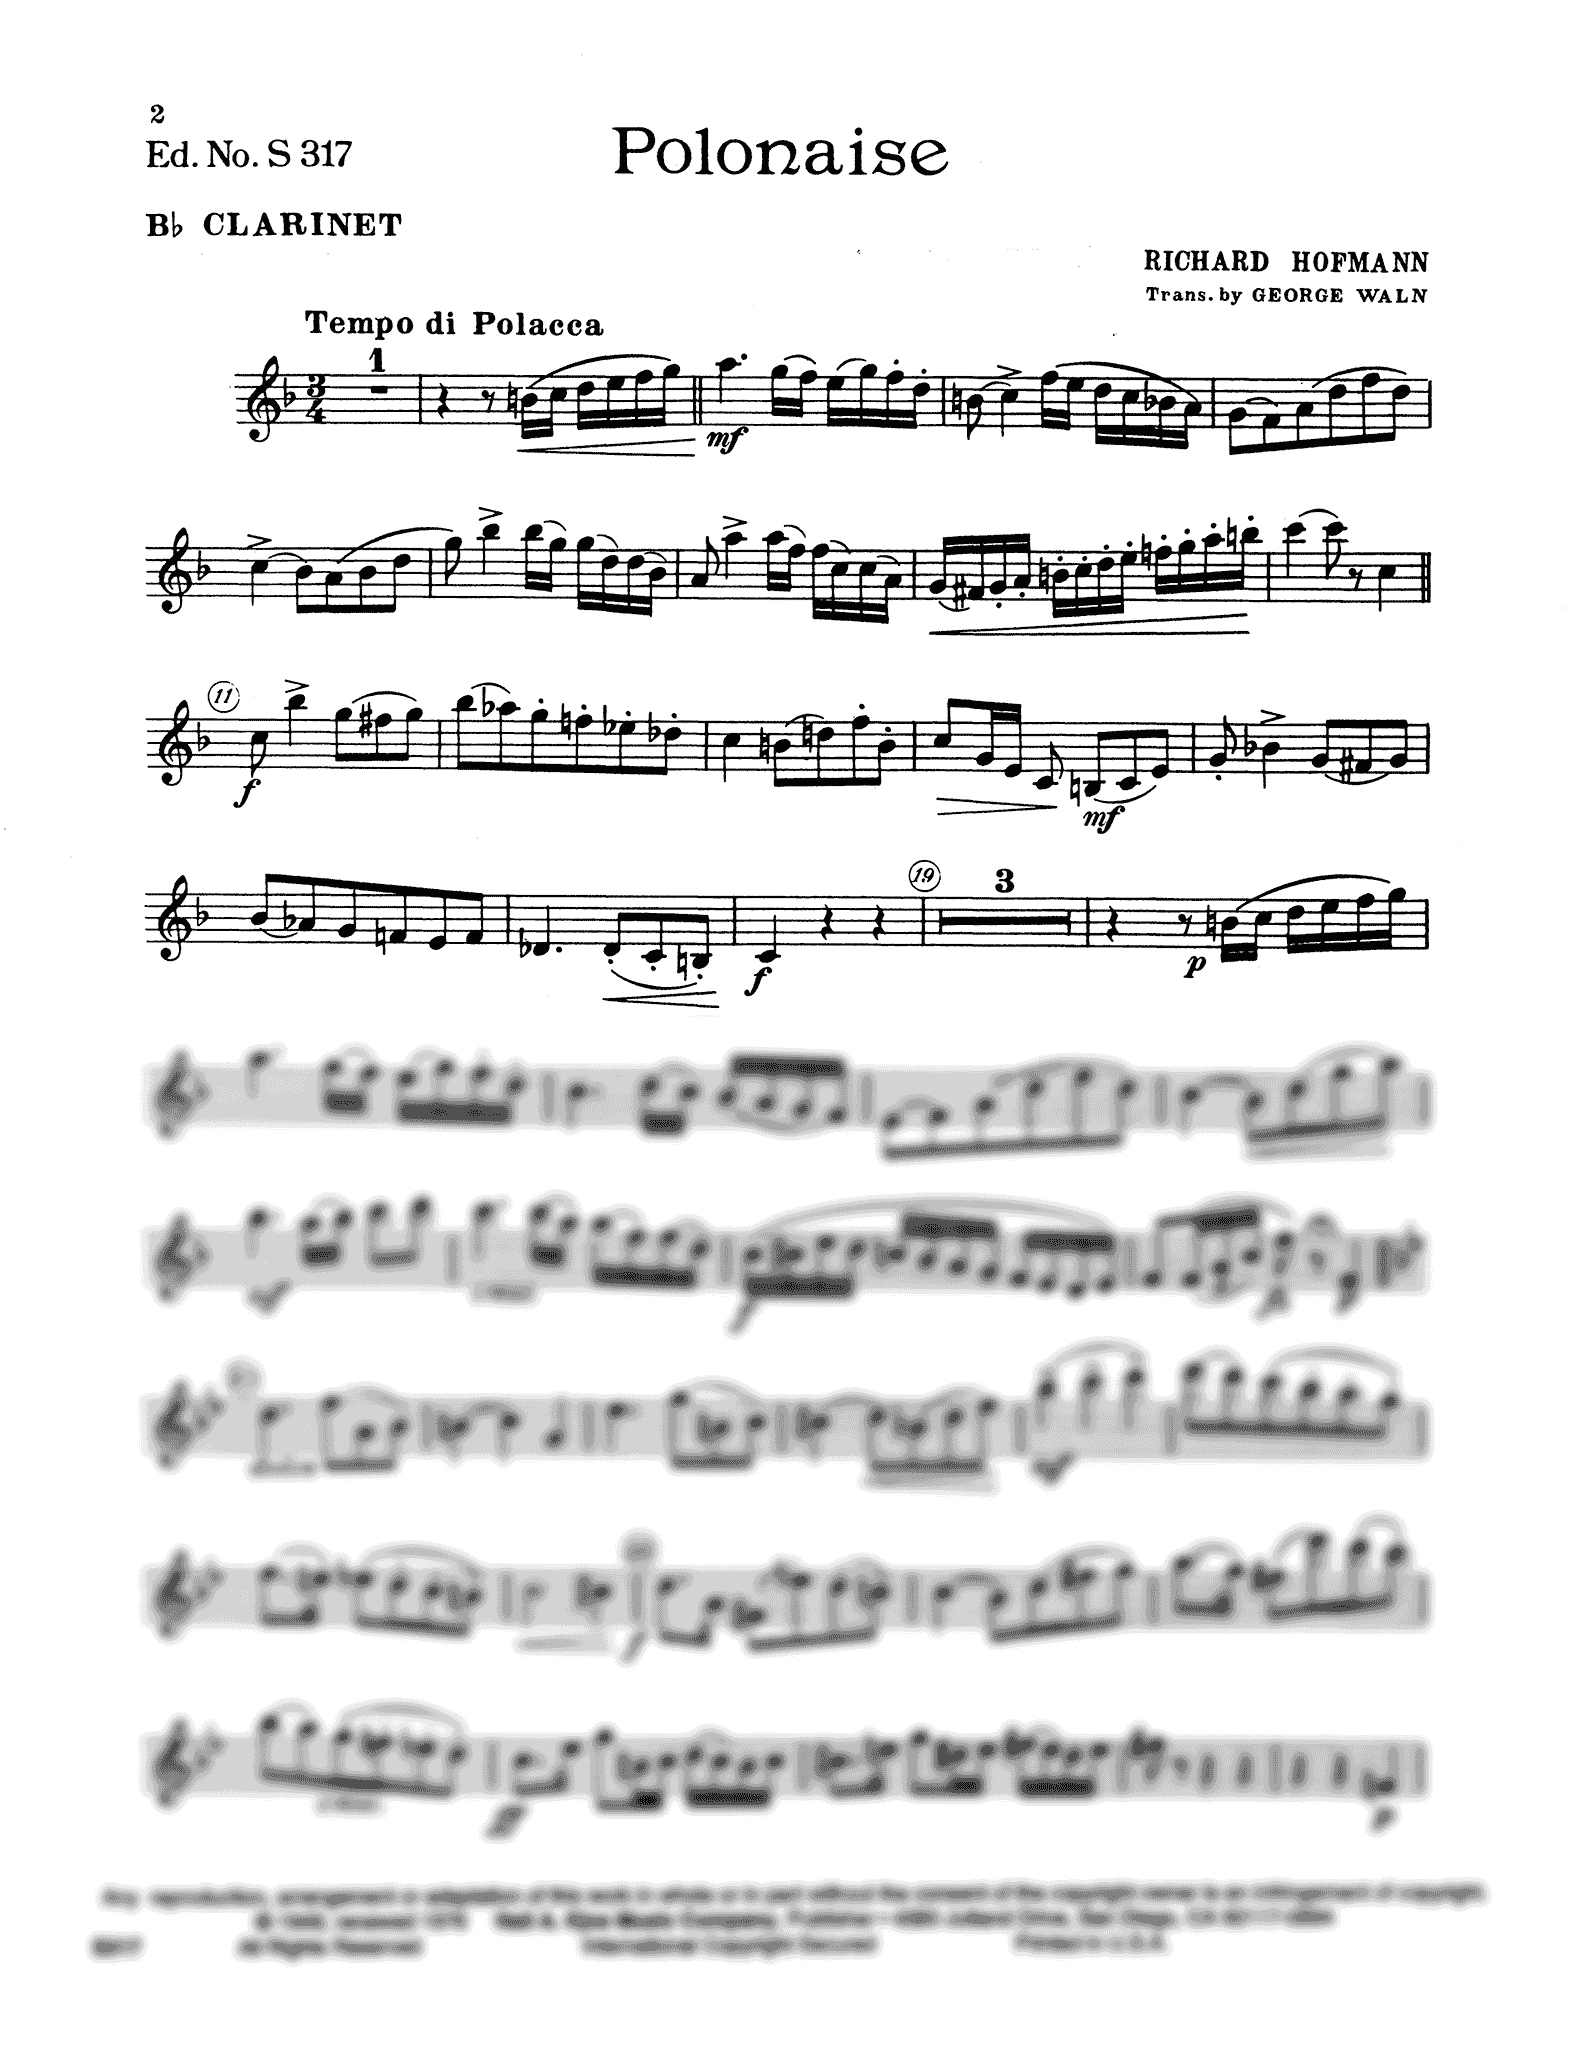 Polonaise Clarinet part